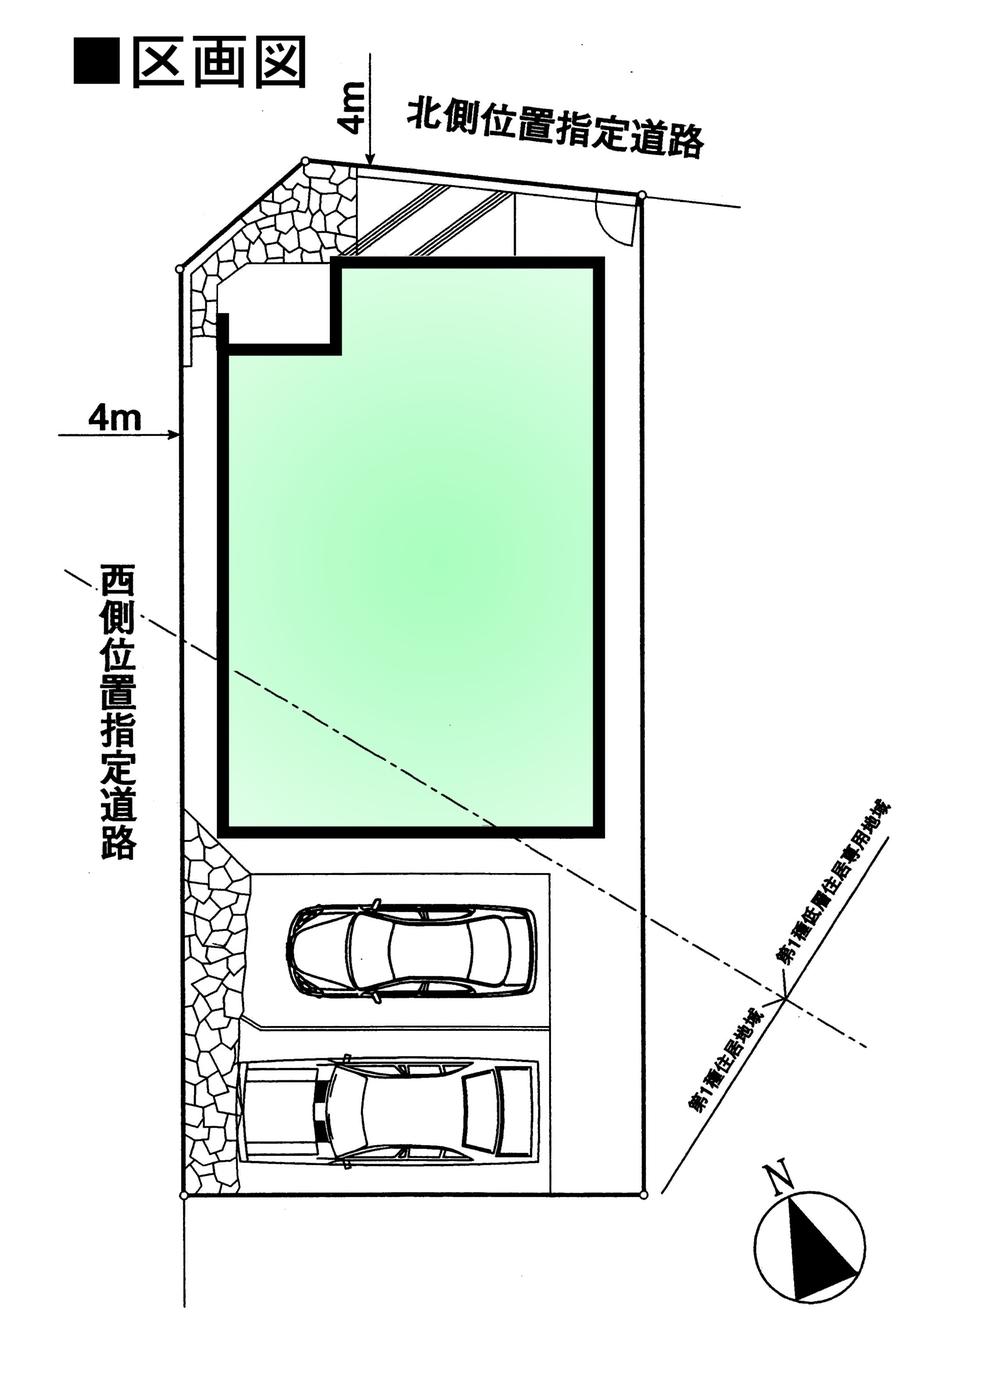 Compartment figure. 33,800,000 yen, 4LDK, Land area 113.82 sq m , Building area 95.43 sq m compartment view